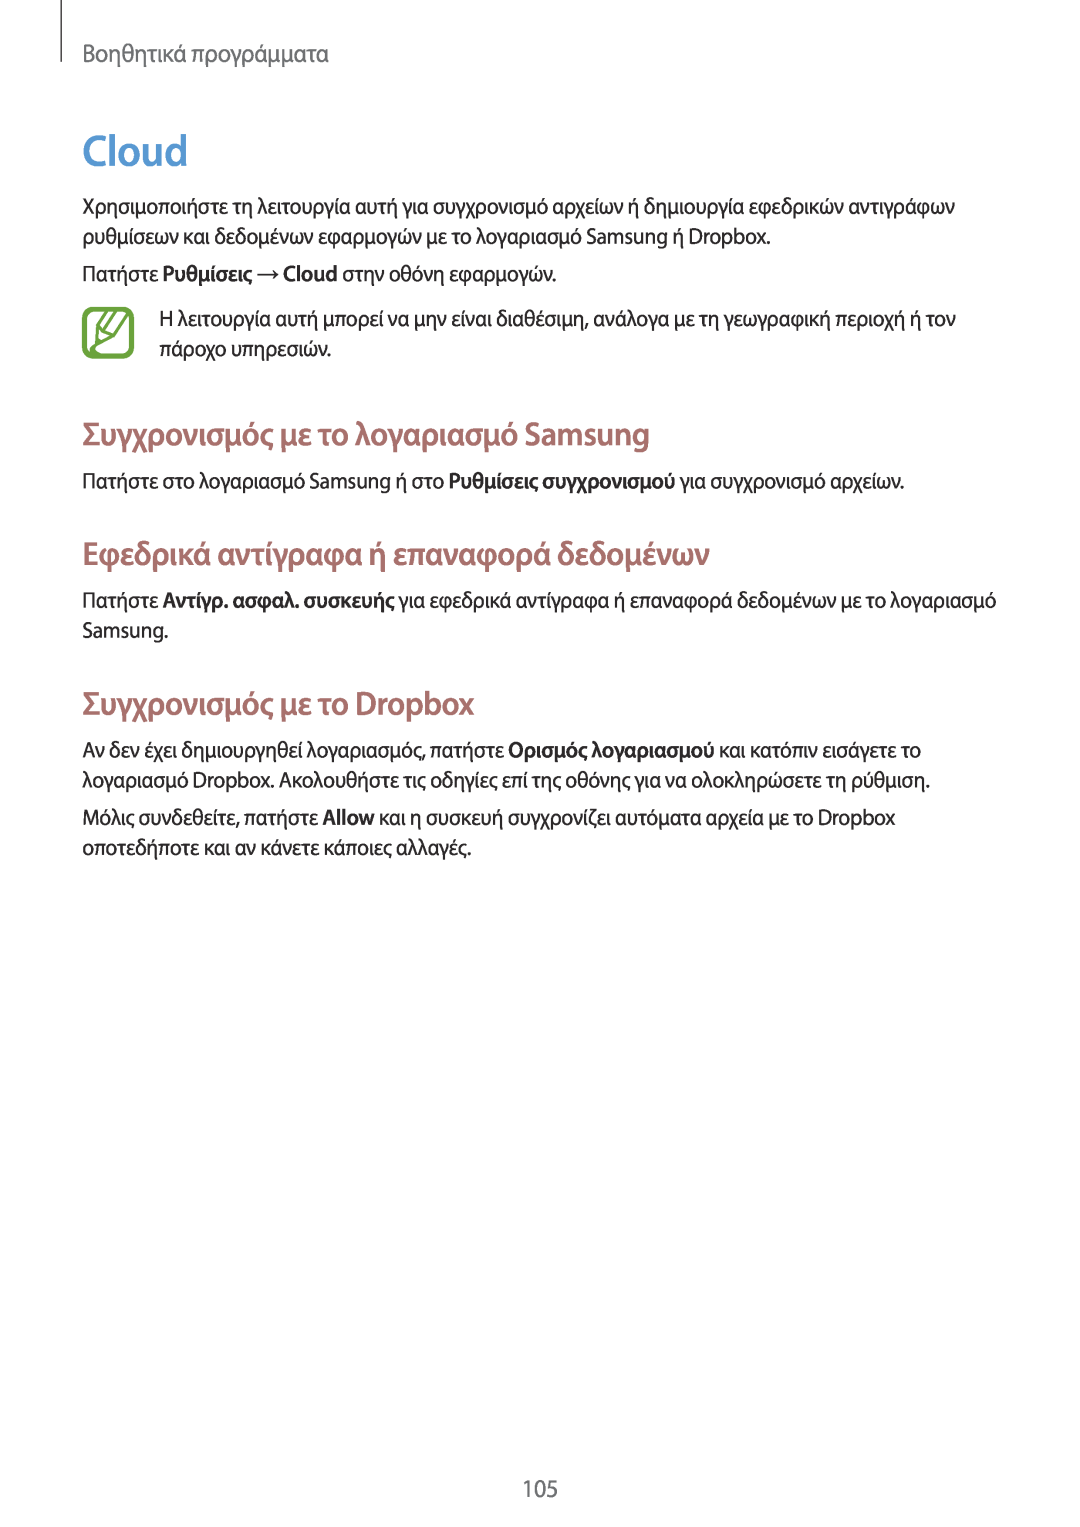 Samsung GT-N7100RWDVGR manual Cloud, Συγχρονισμός με το λογαριασμό Samsung, Εφεδρικά αντίγραφα ή επαναφορά δεδομένων 